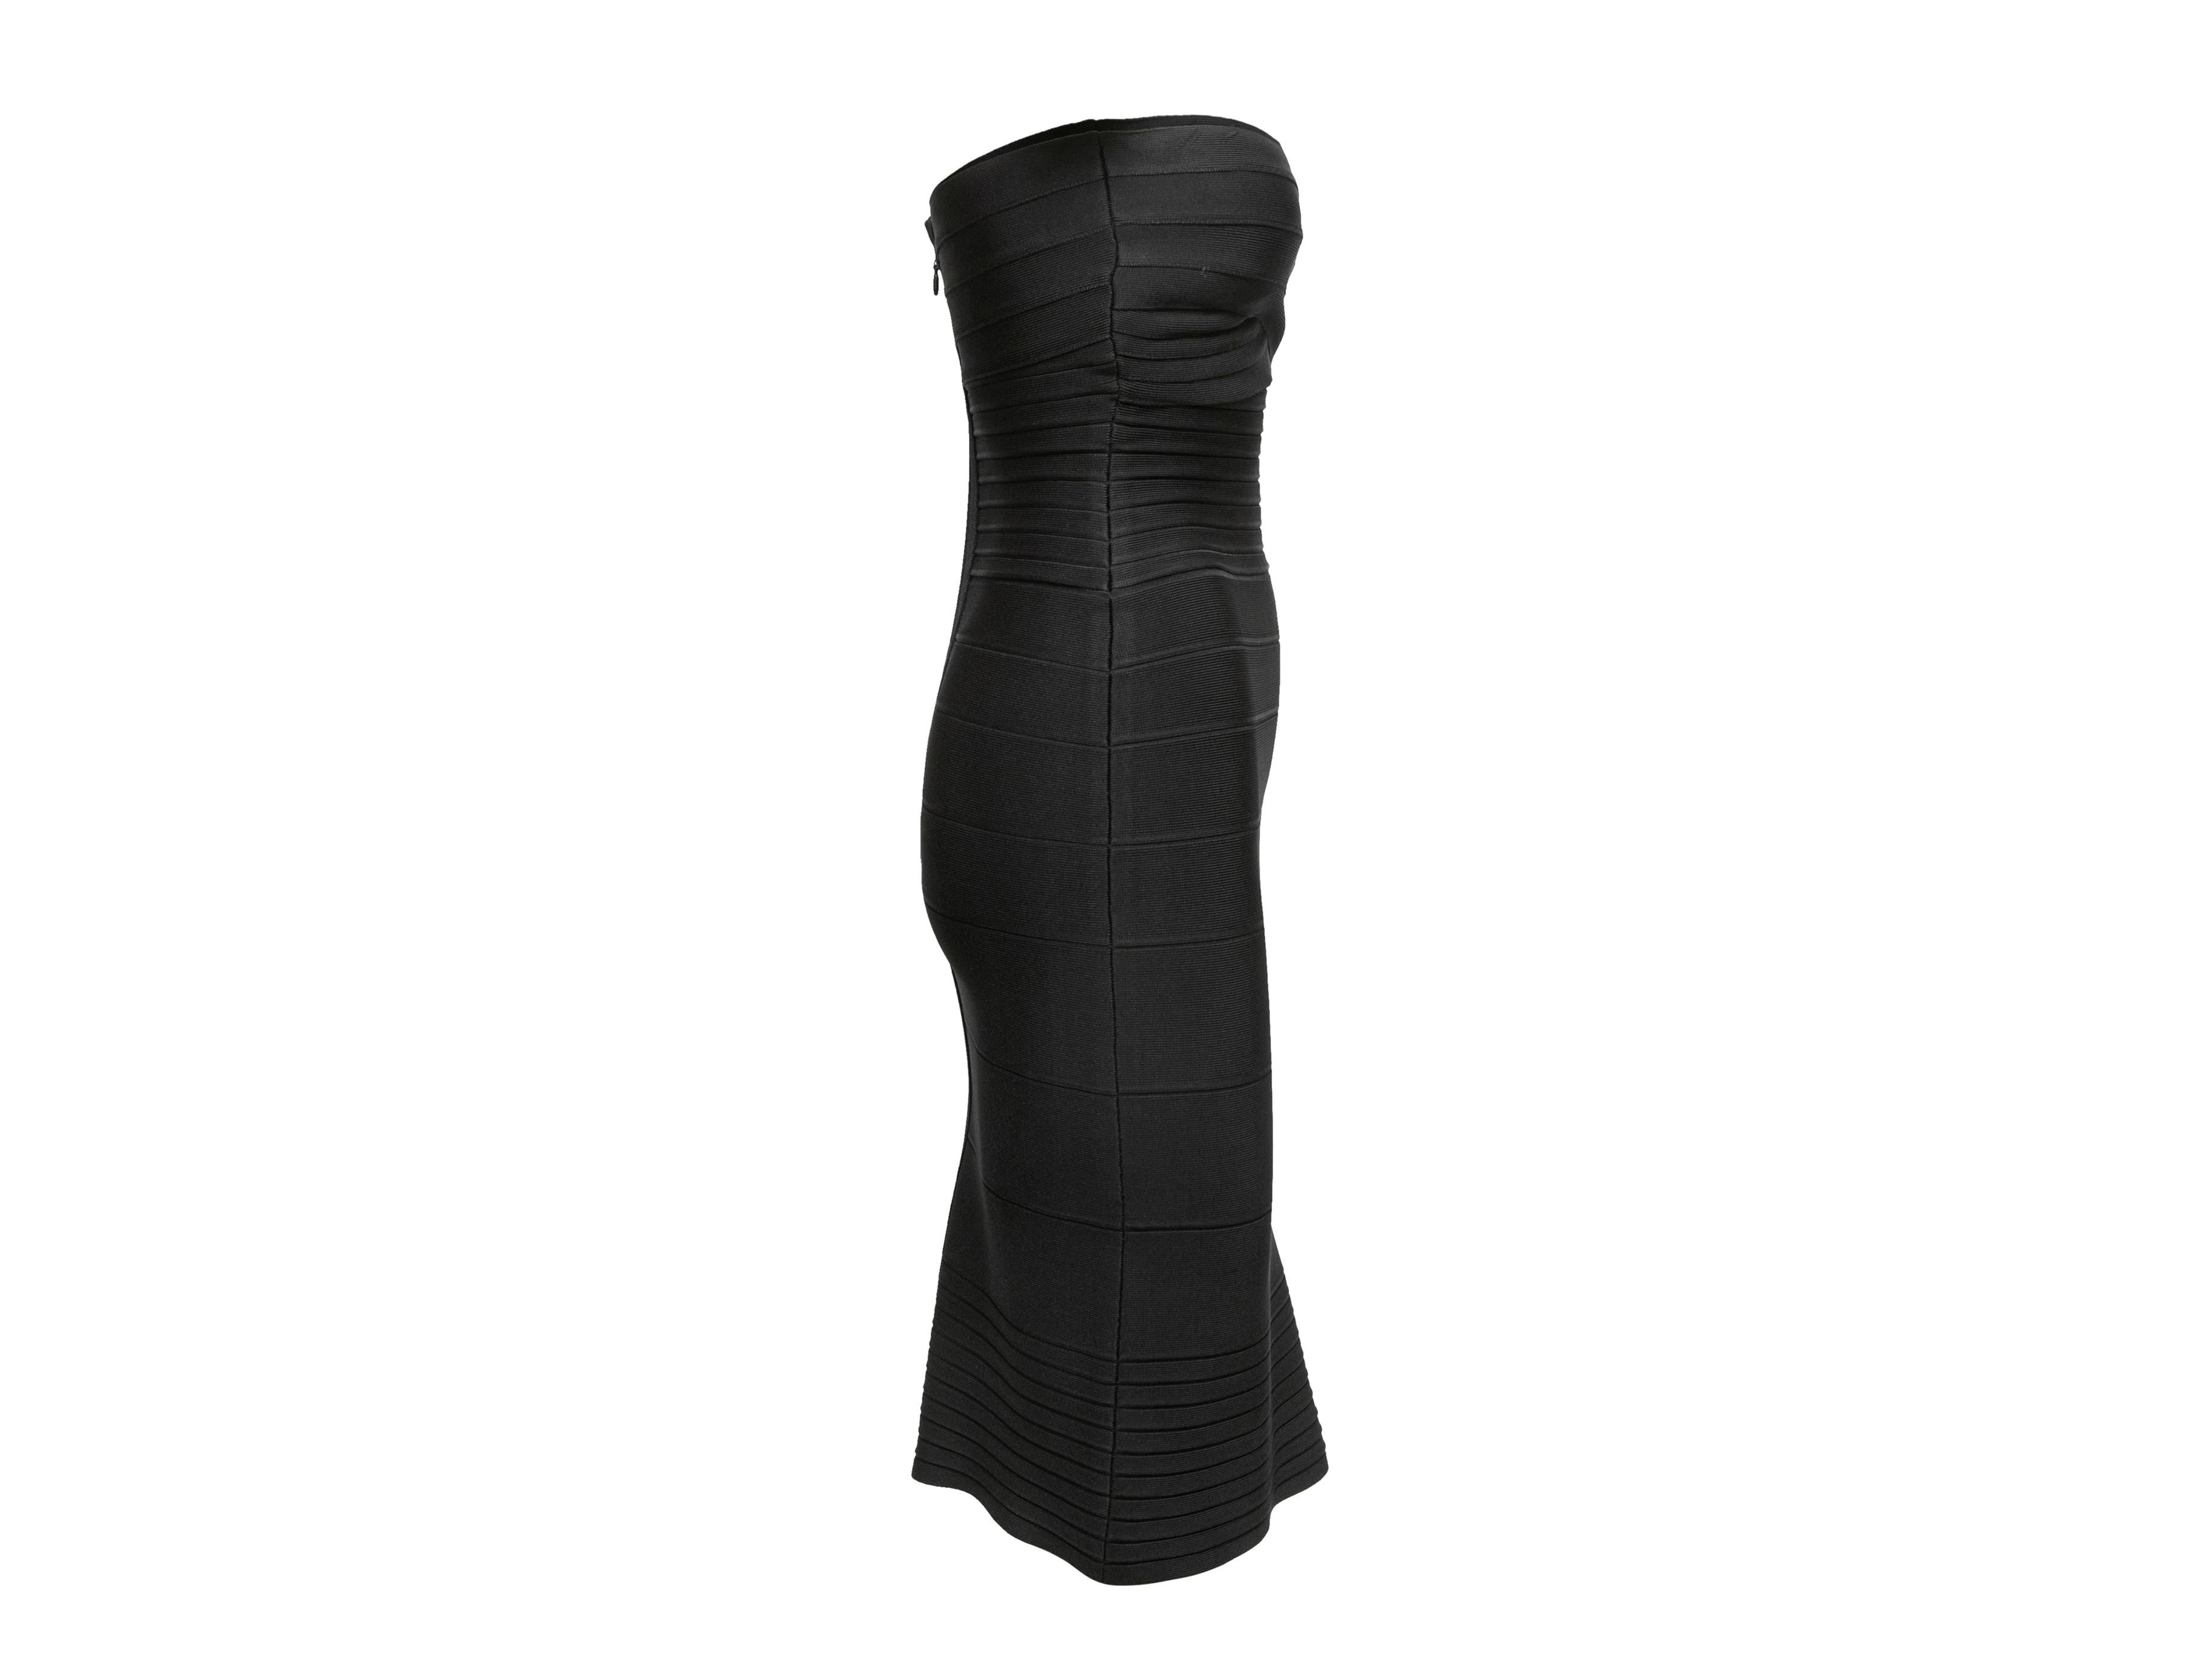 Black strapless bandage dress by Herve Leger. Sweetheart neckline. Zip closure at back. 24